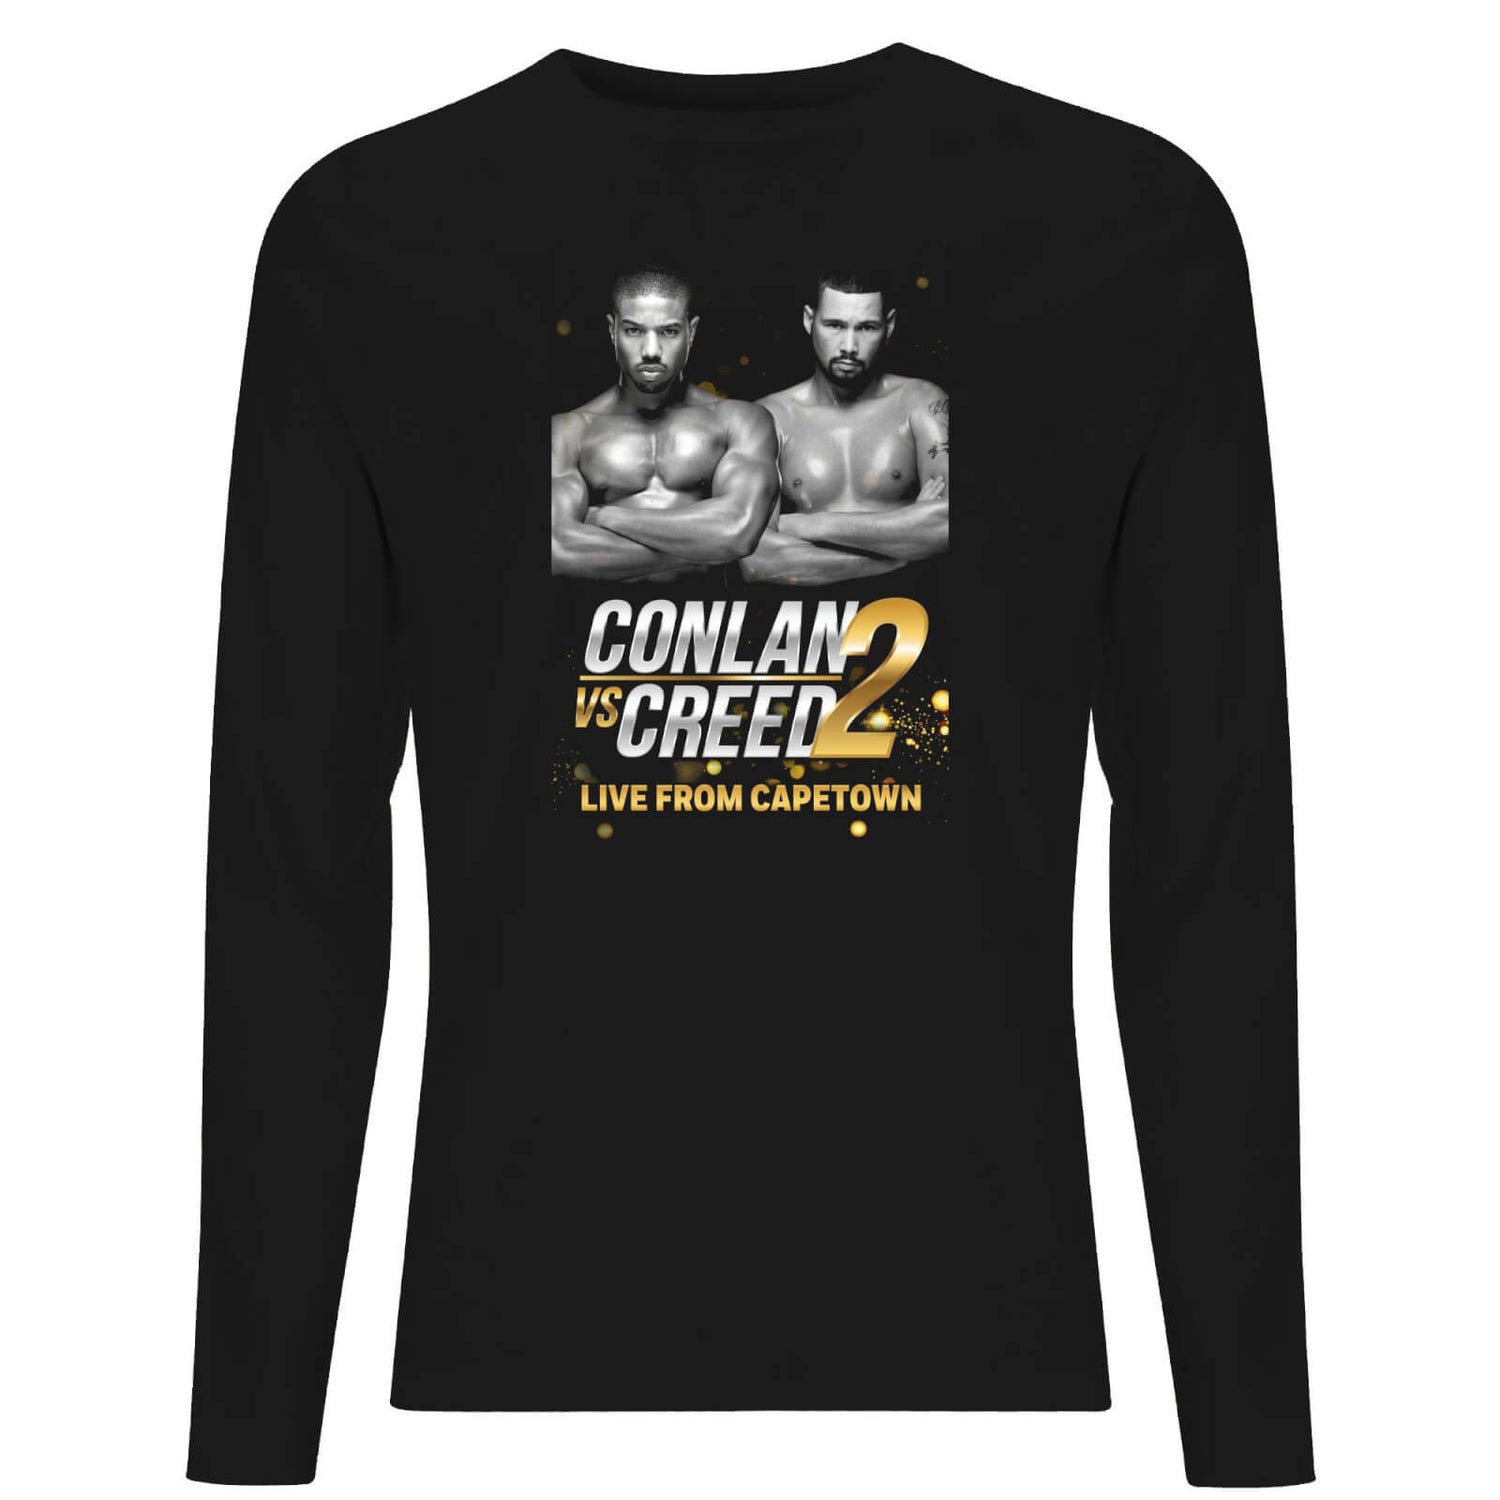 Creed Conlan Vs Creed 2 Poster Men's Long Sleeve T-Shirt - Black - XS